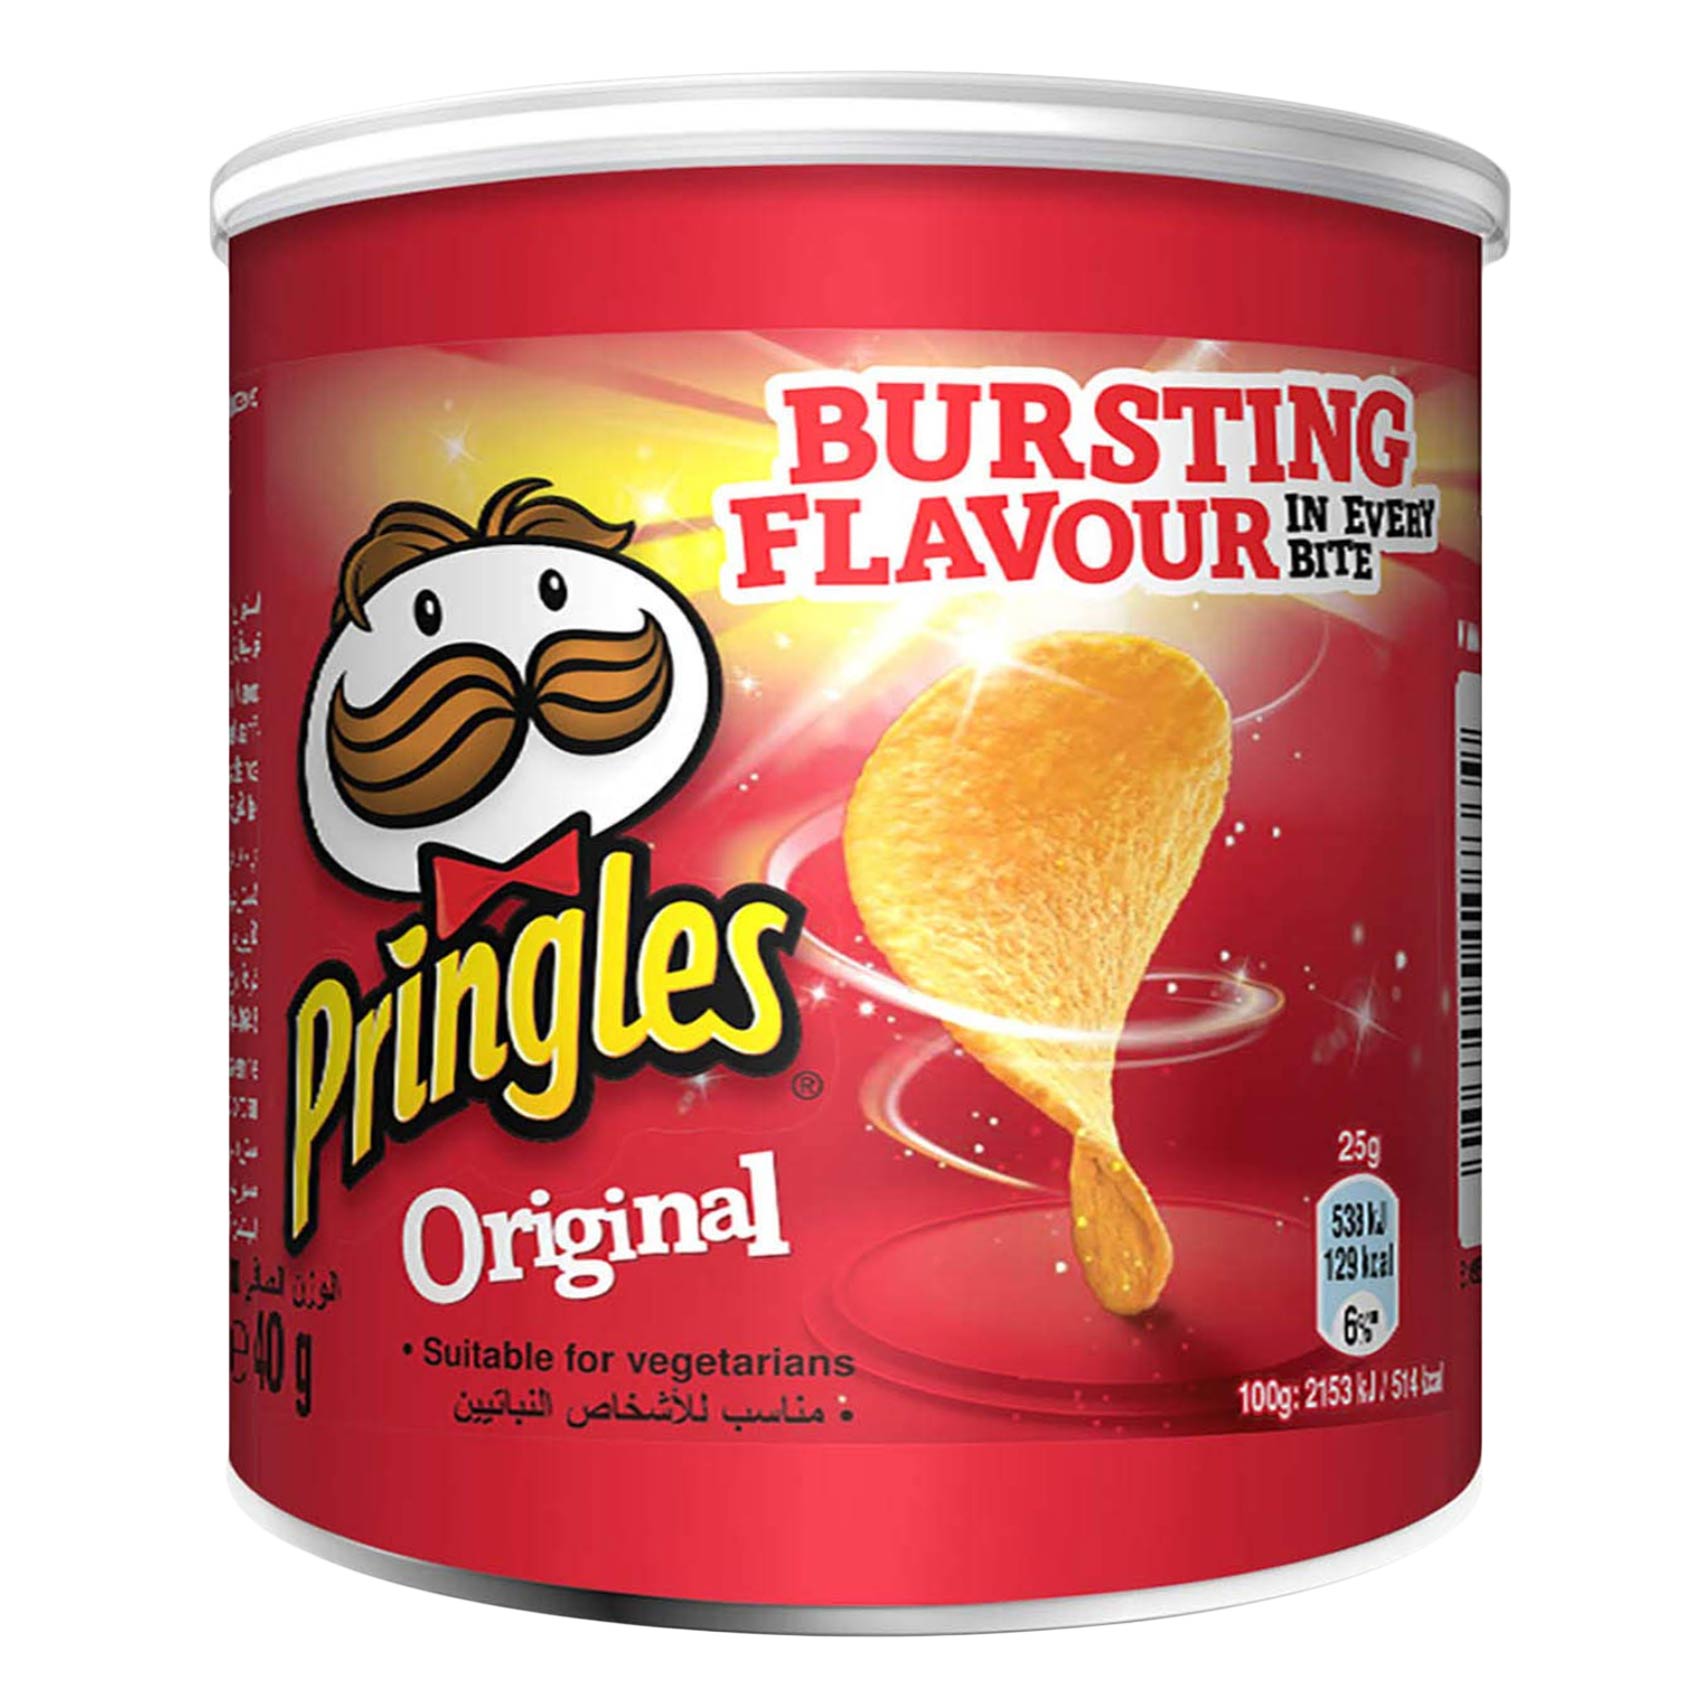 Pringles Original Perfect Potato Crisp Chips 40g